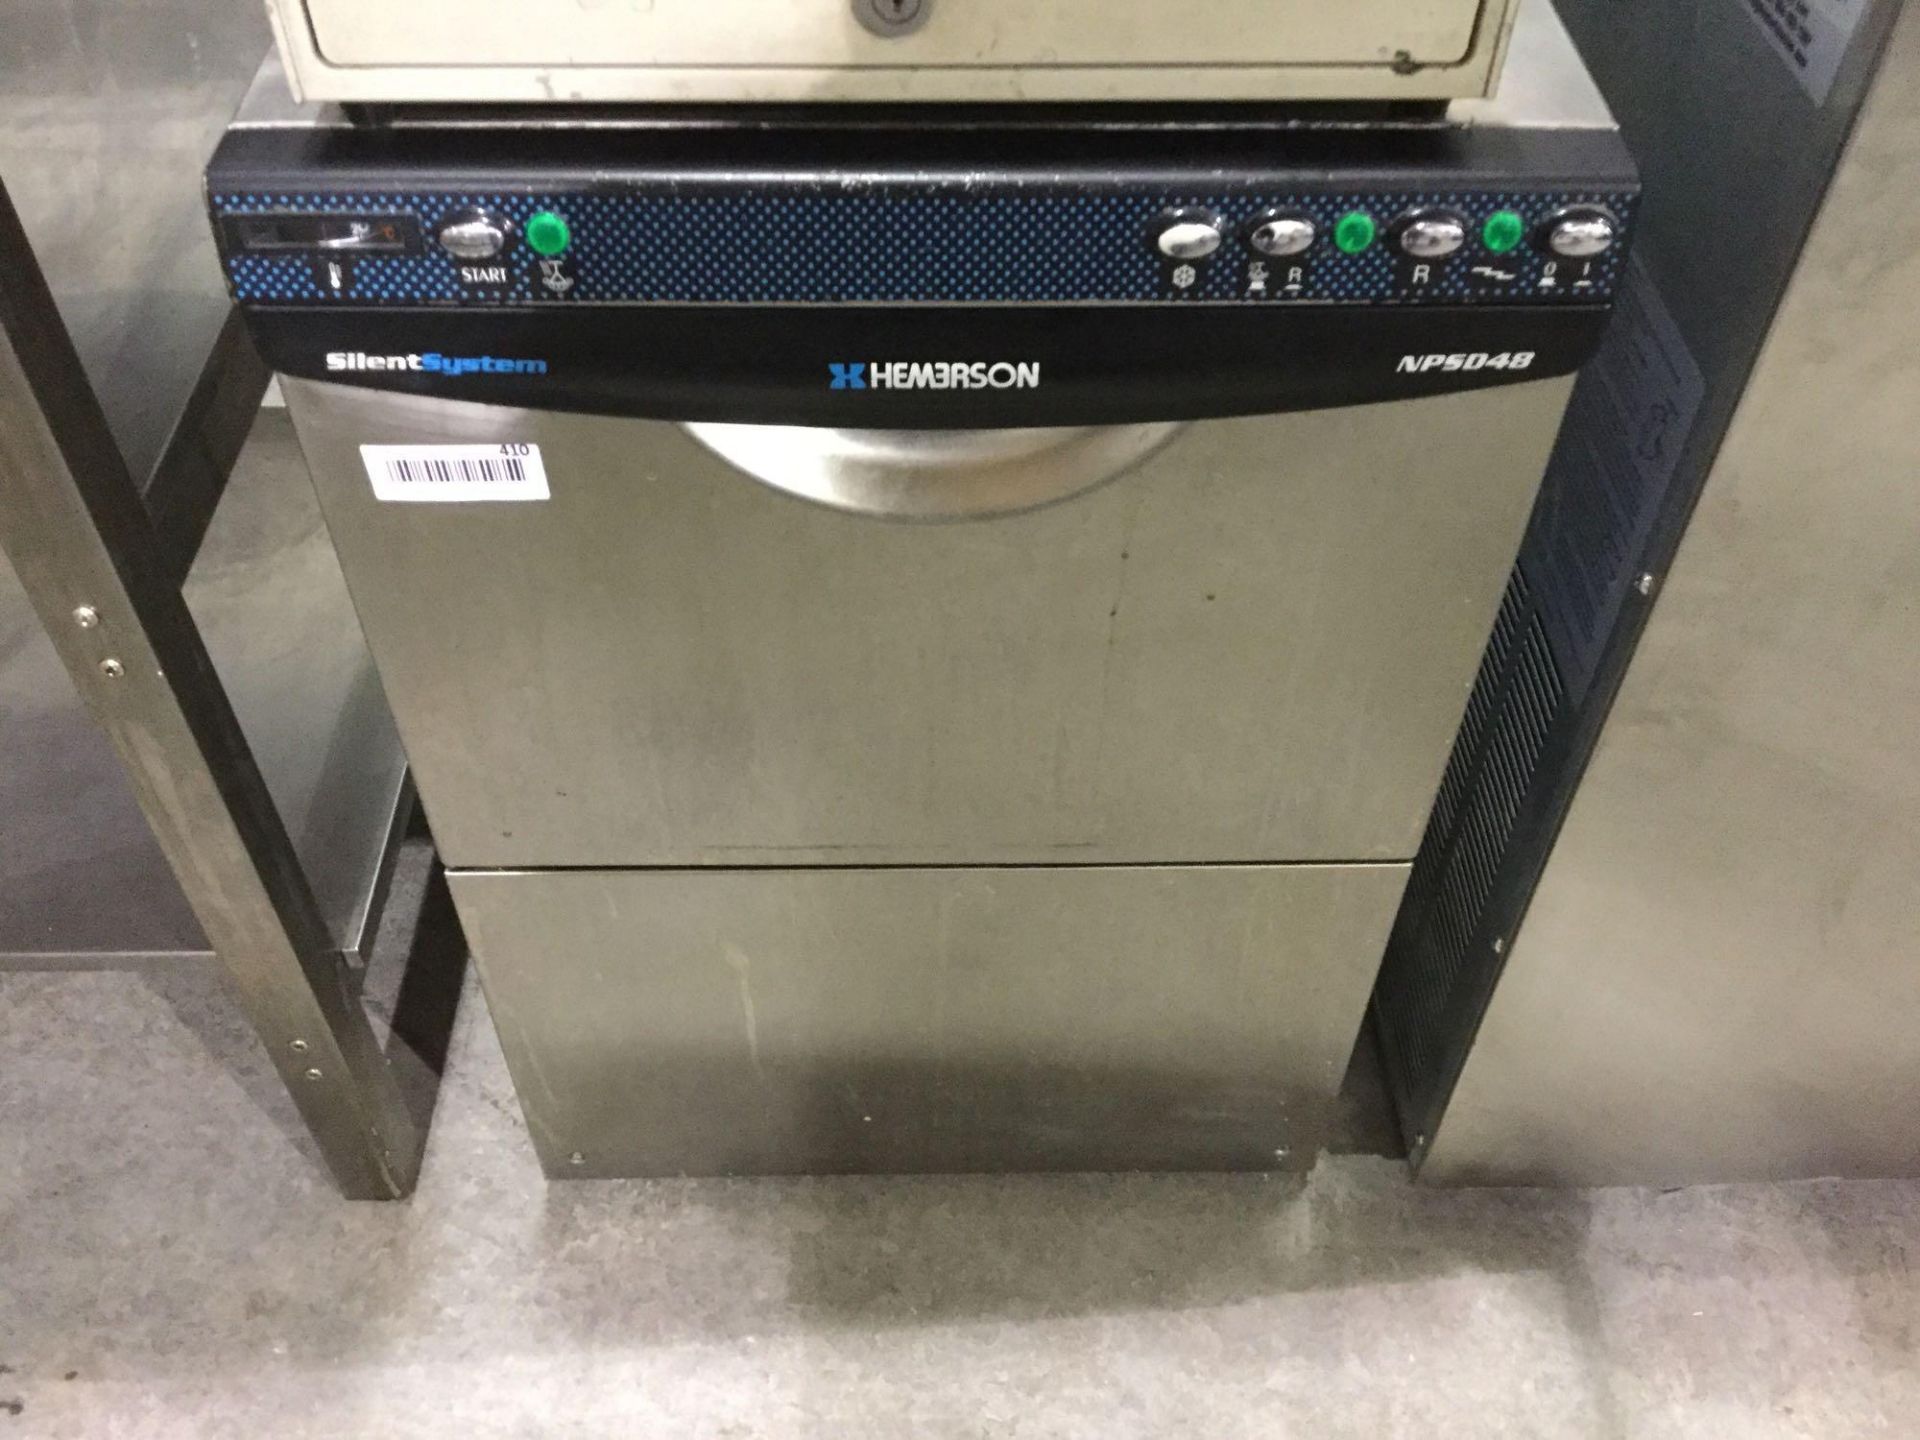 Silent System - Hemerson - Mini Dishwasher - model NPSD 48